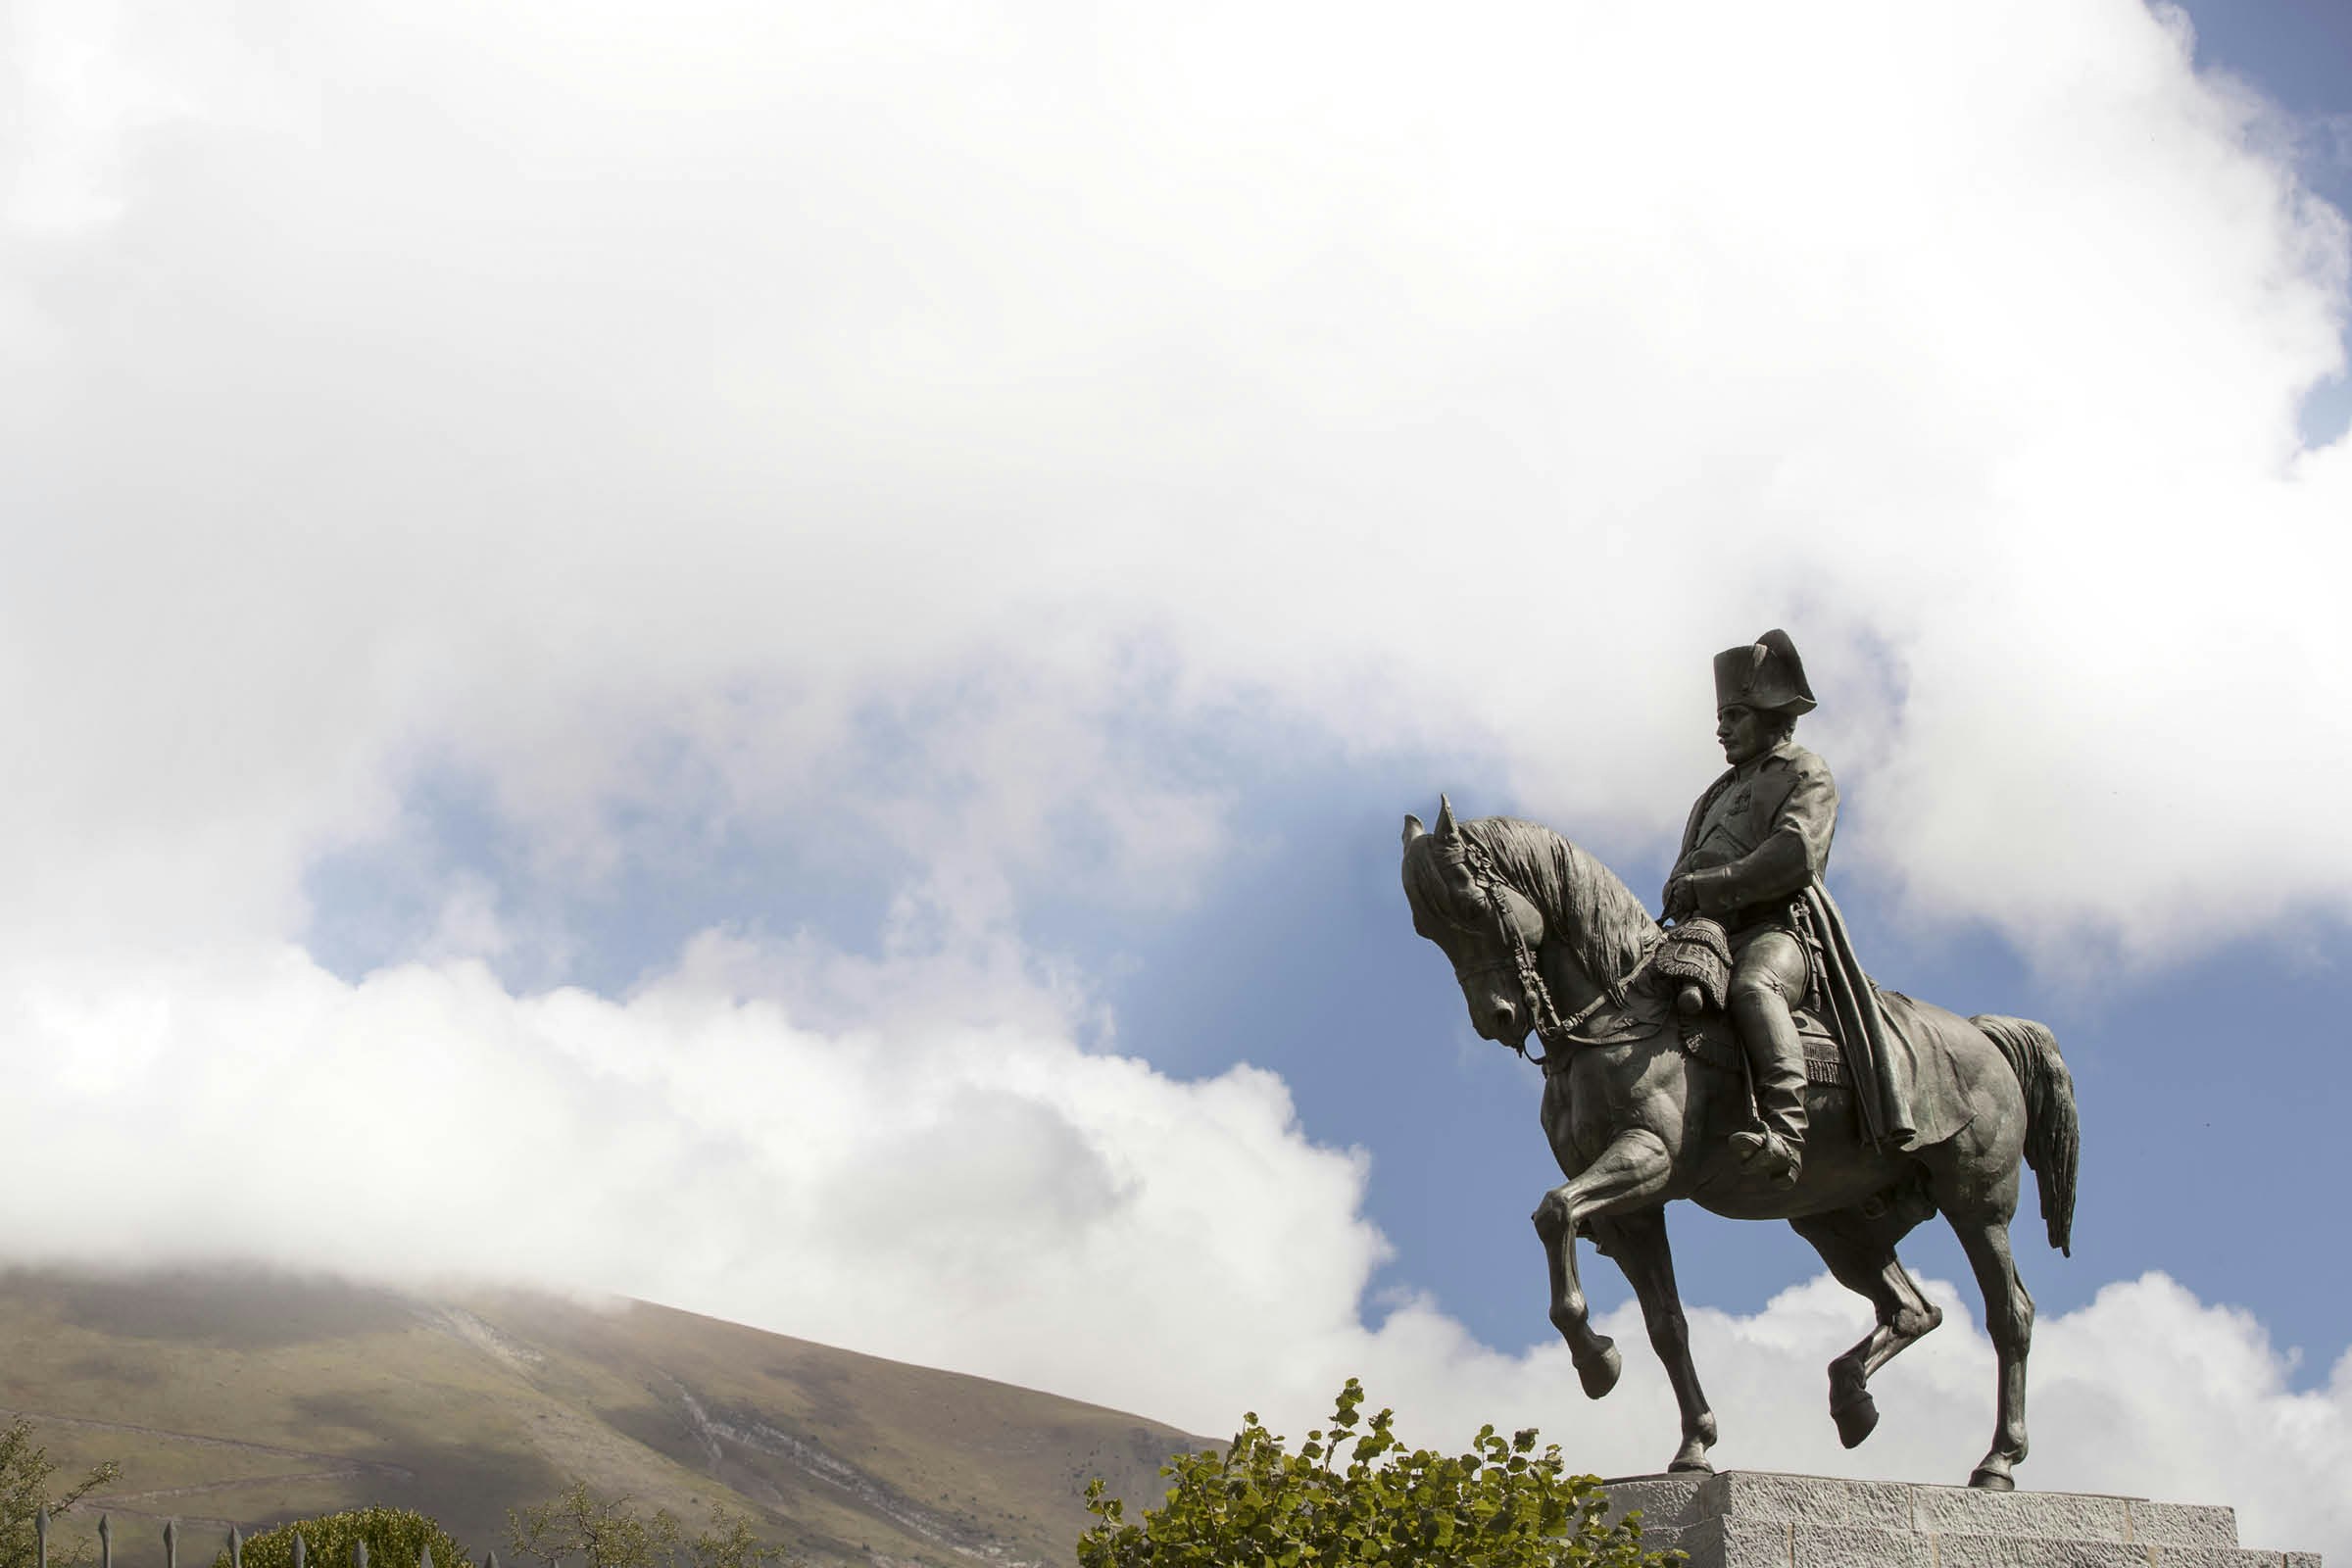 A horseback statue of Napoleon with his distinctive bicorn hat